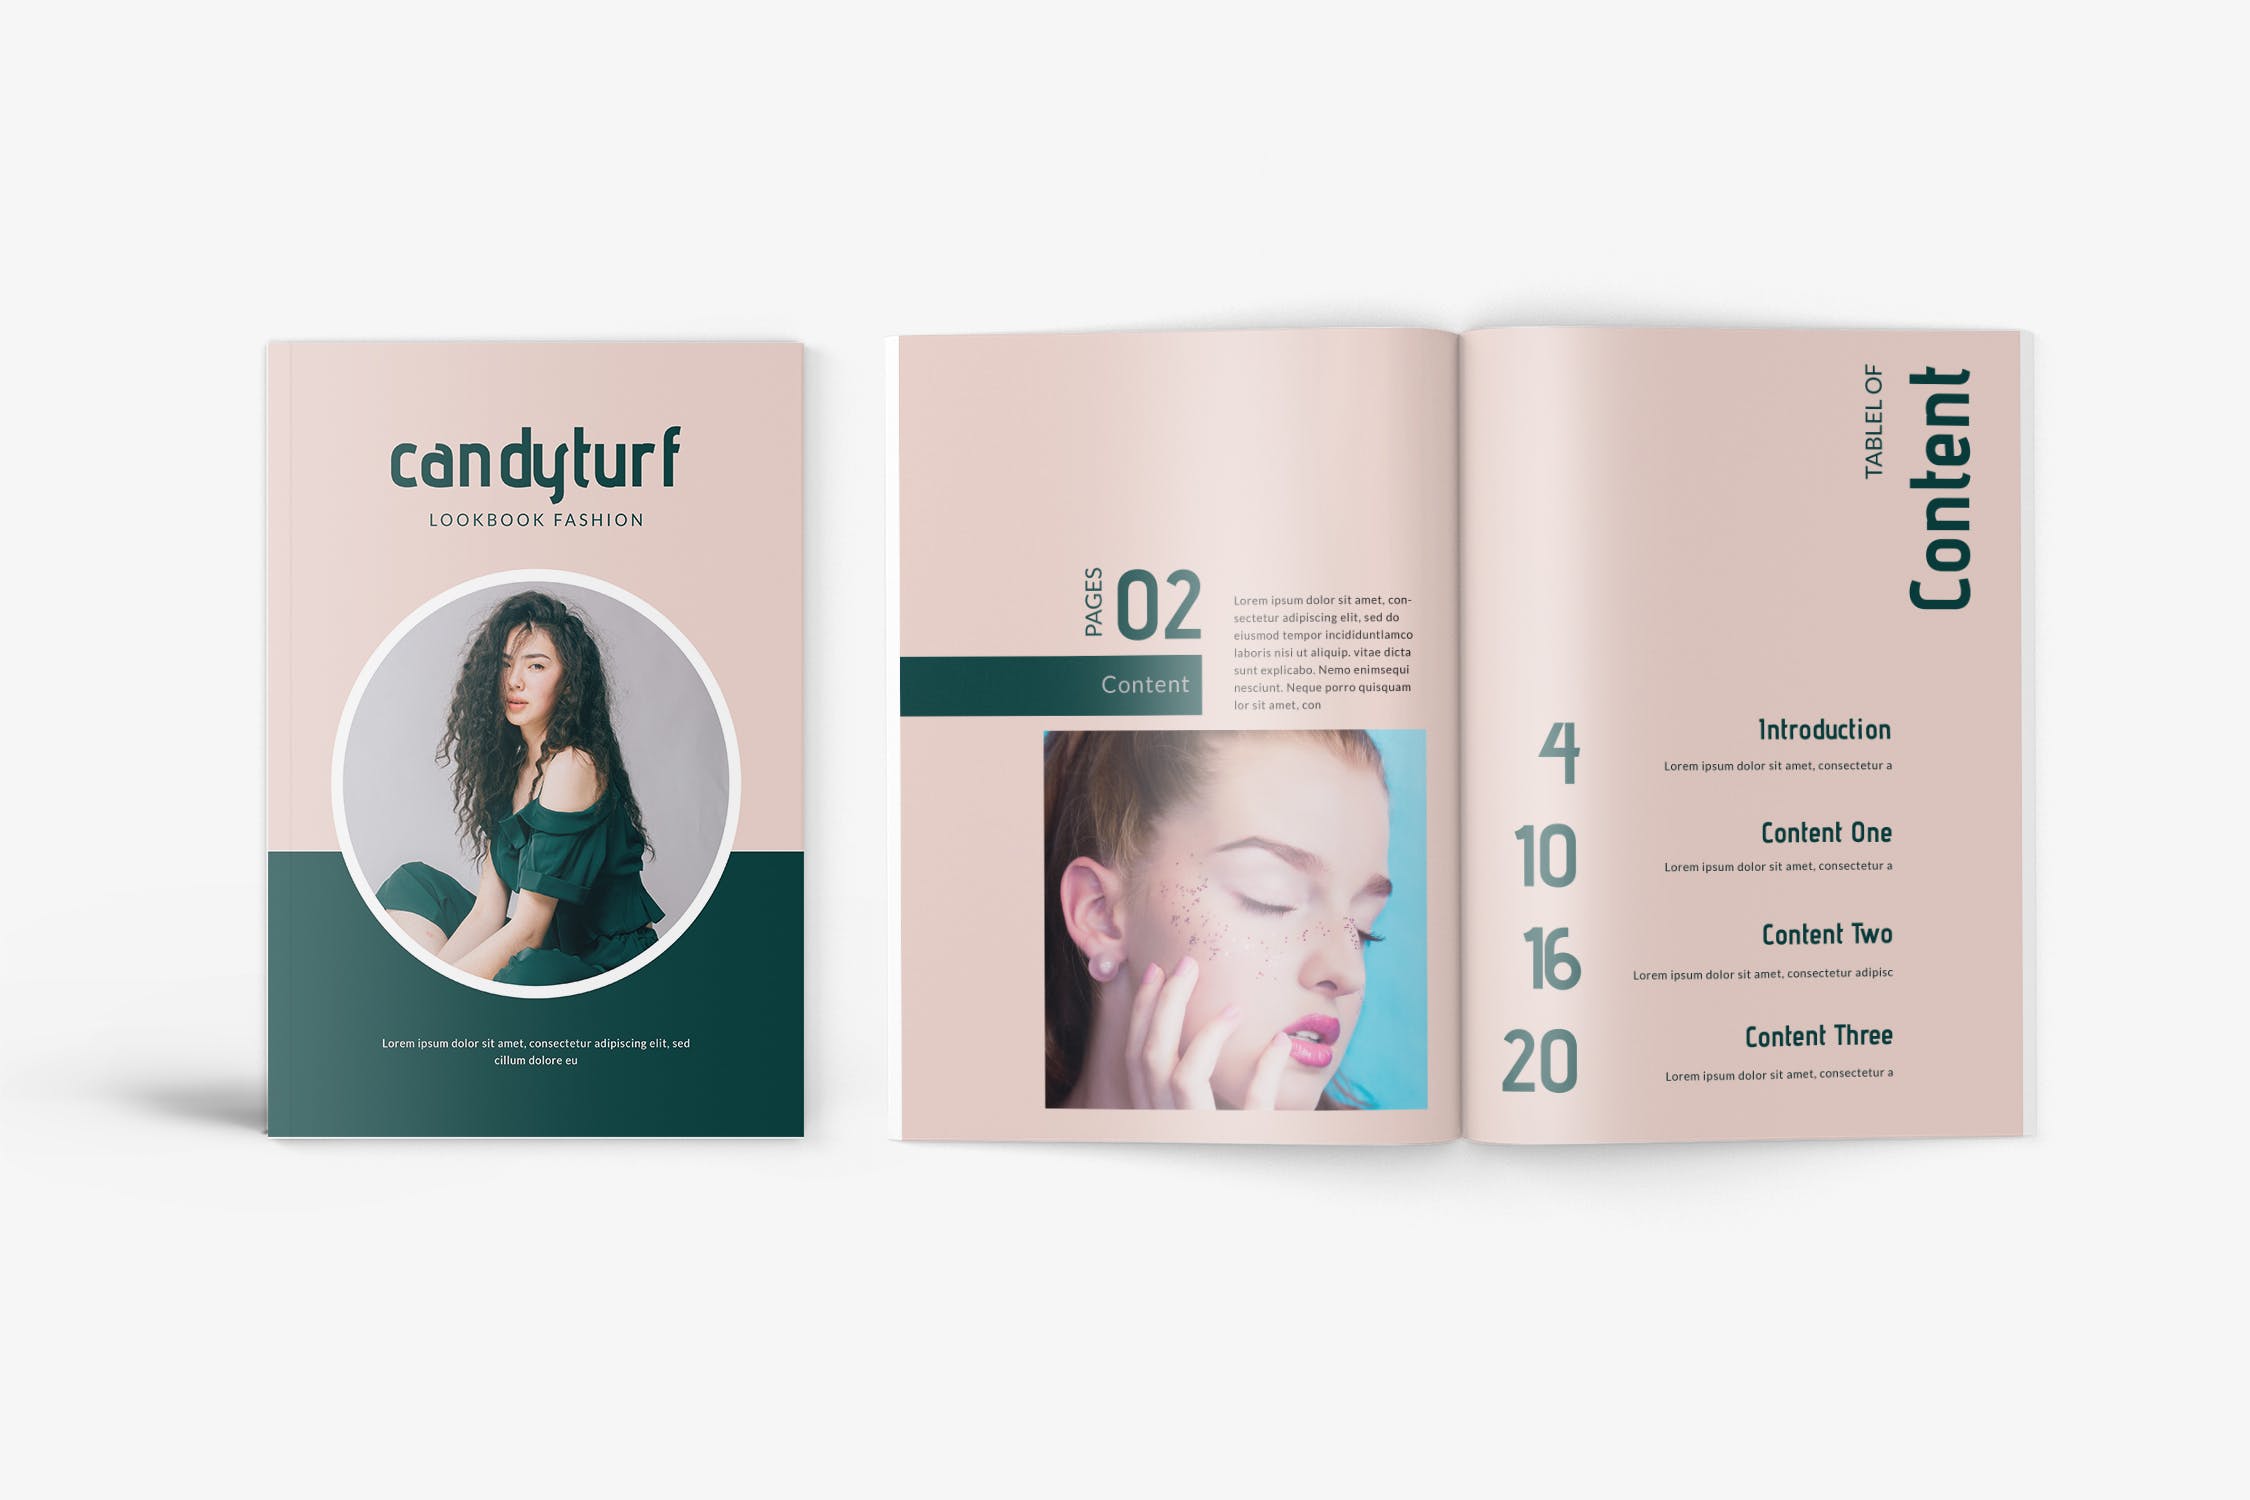 时尚服饰品牌产品素材库精选目录设计模板 Candyturf Fashion Lookbook Catalogue插图